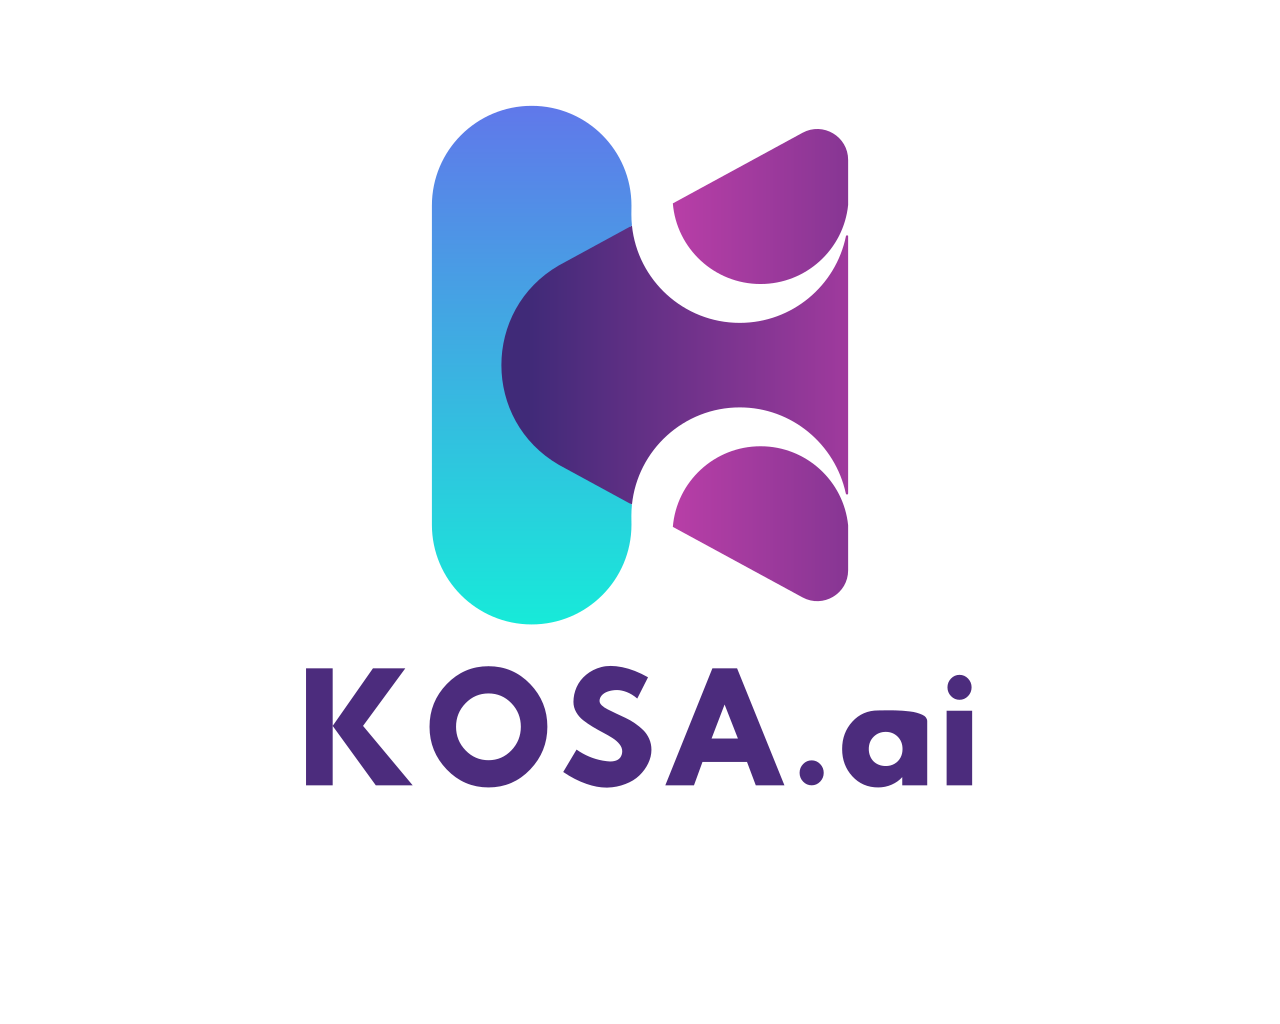 kosa logo.png